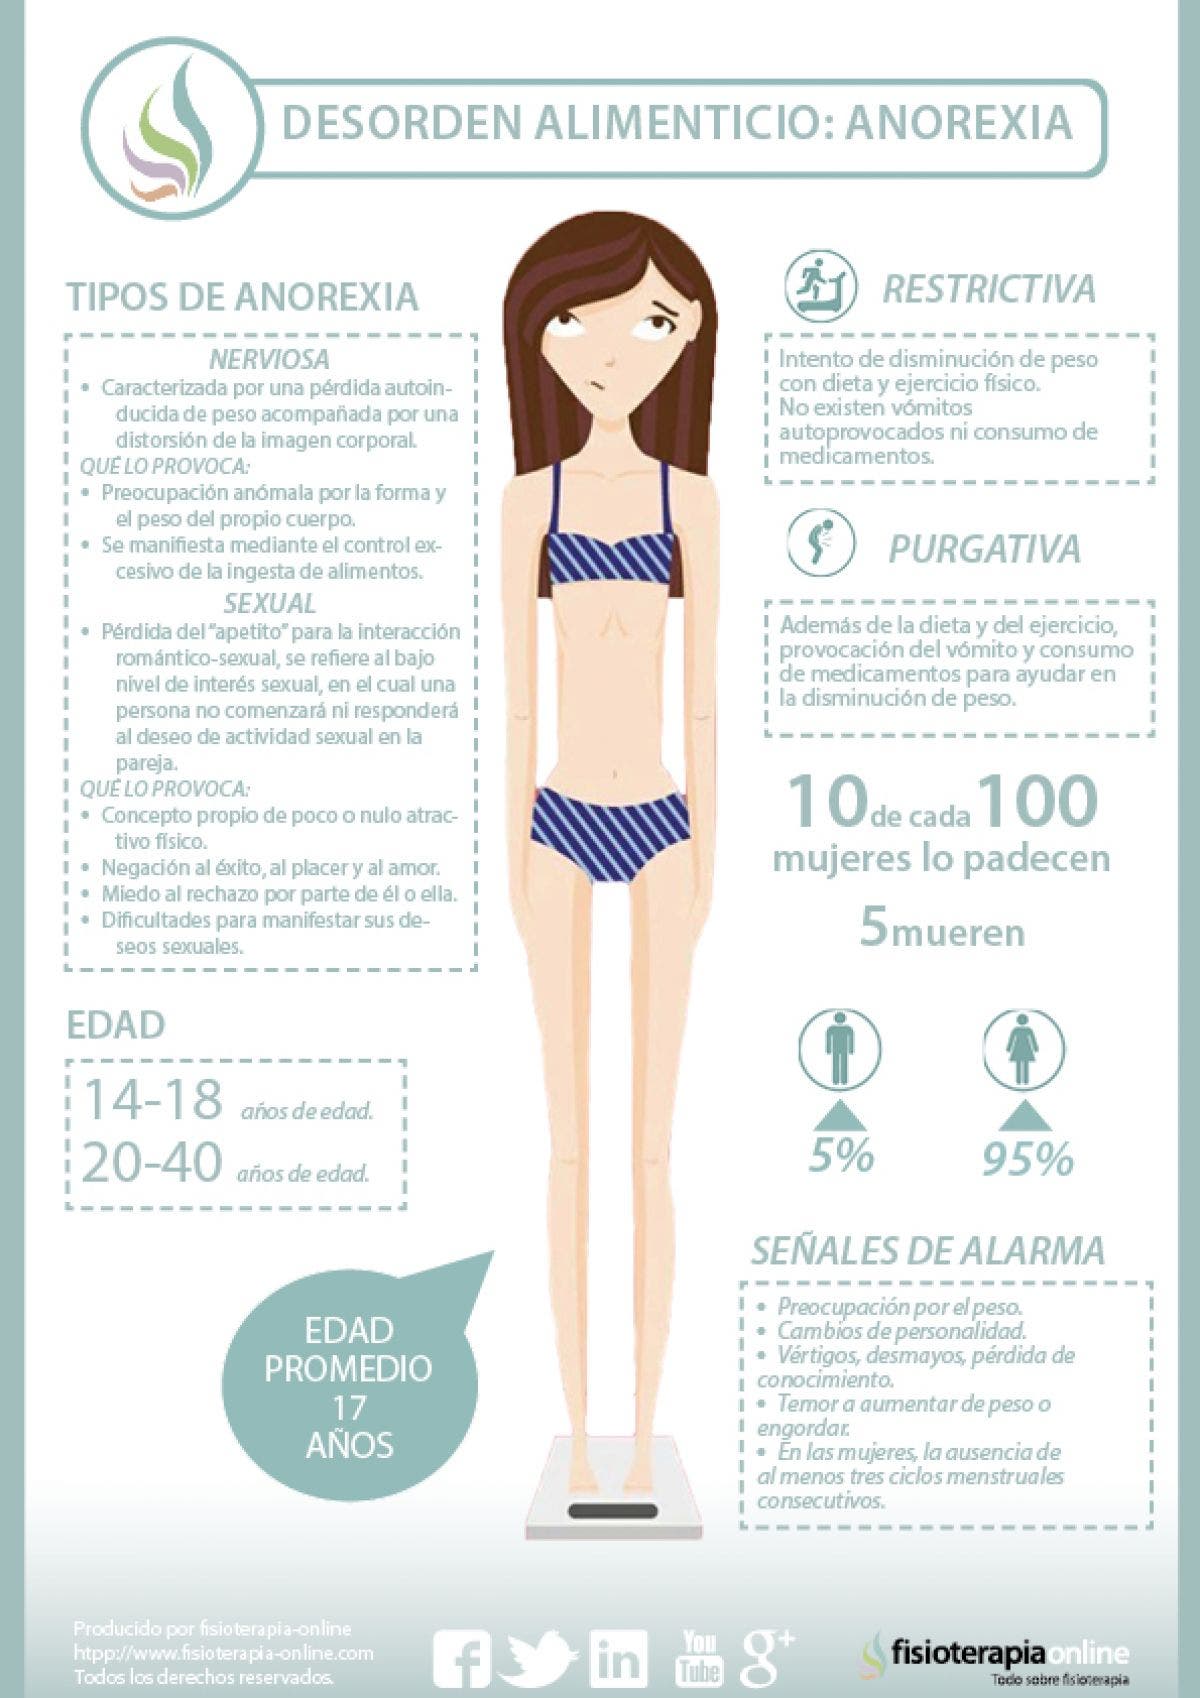 La anorexia, un serio trastorno alimentario